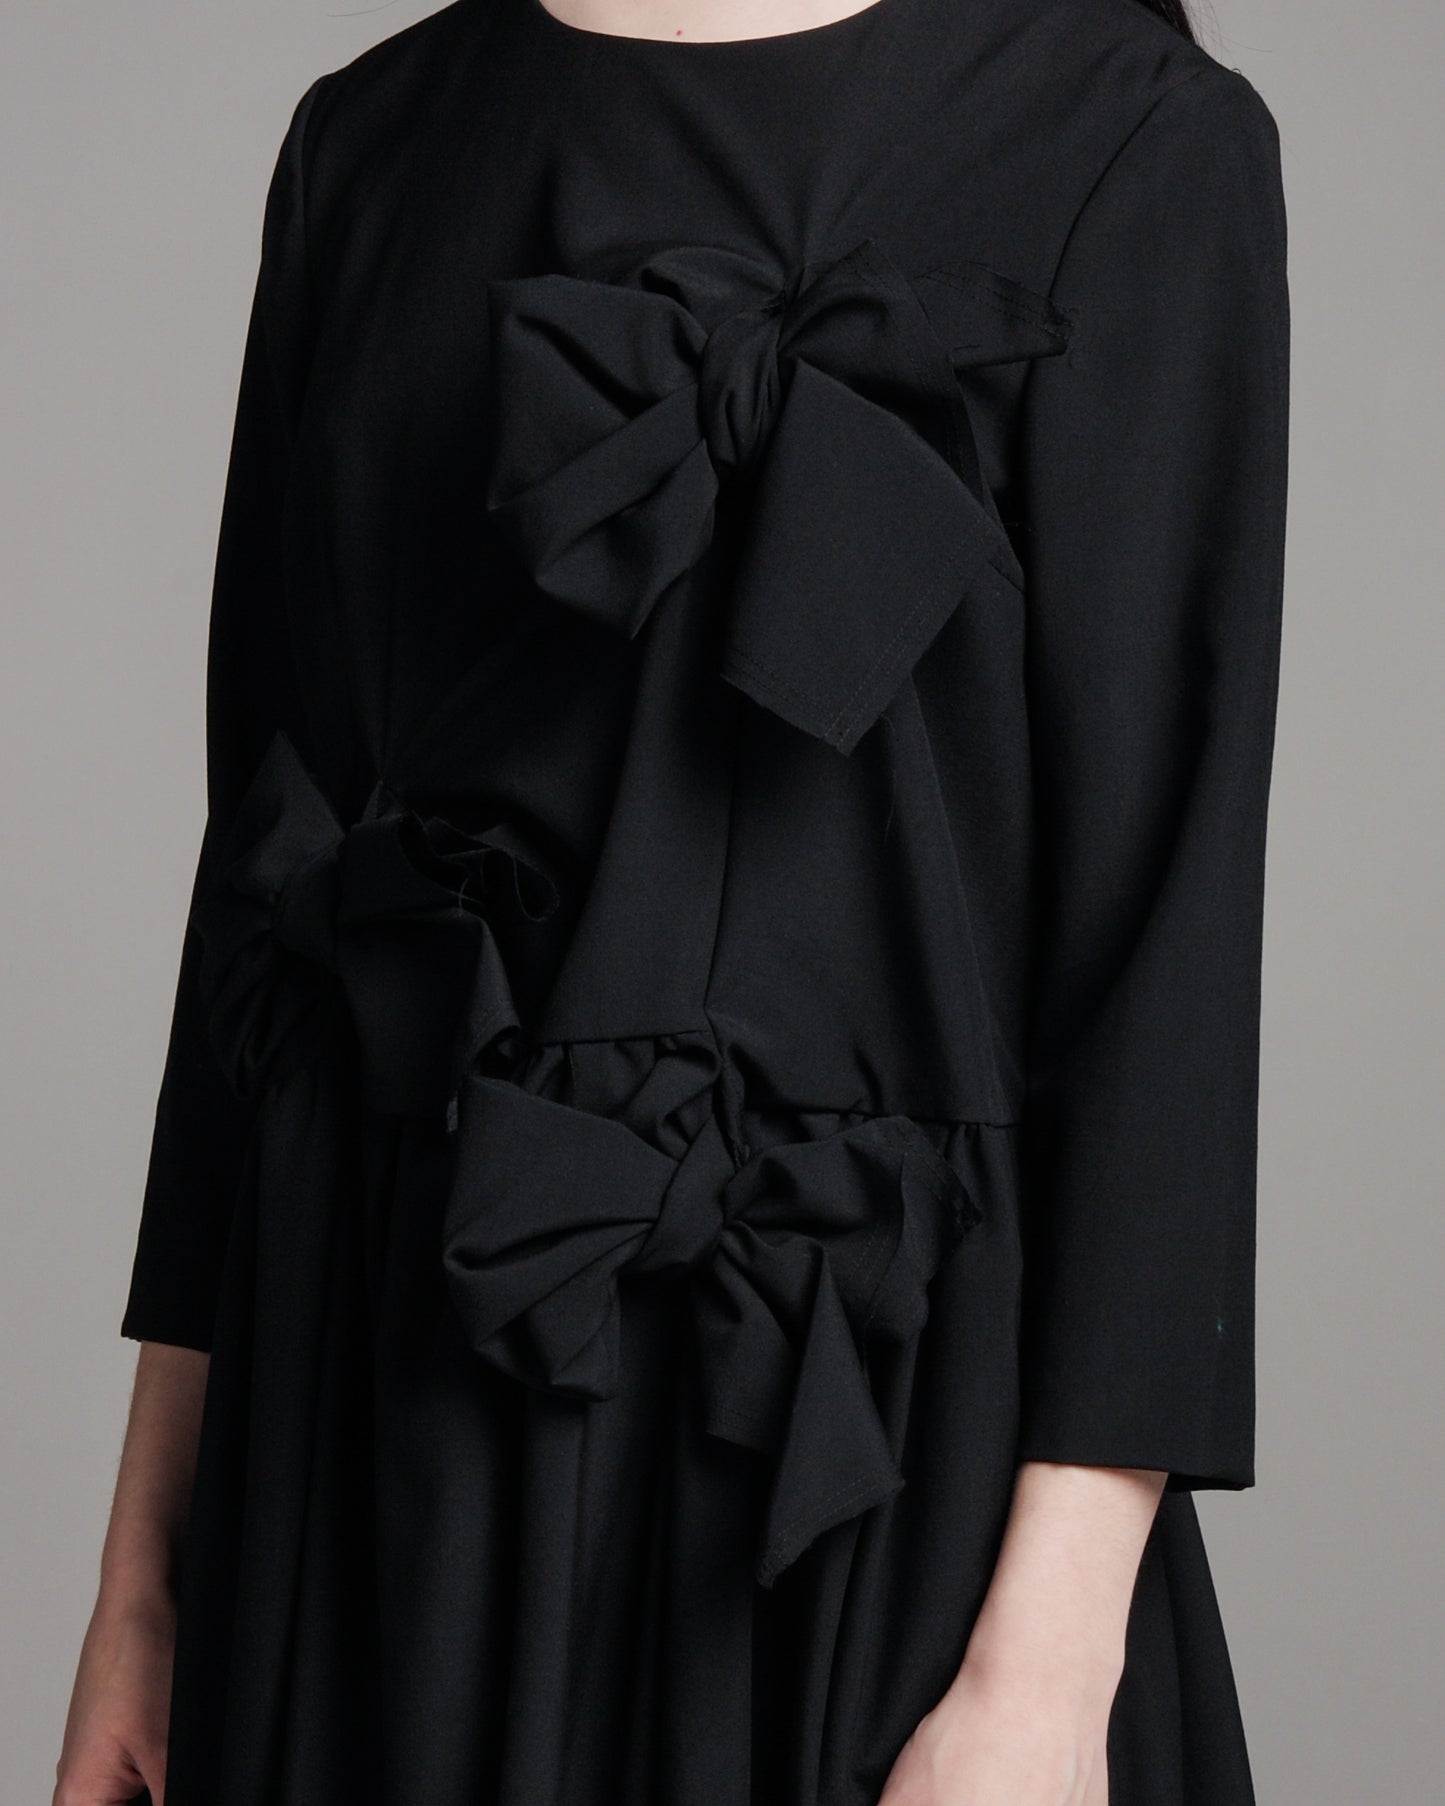 Black Bow Detail Dress